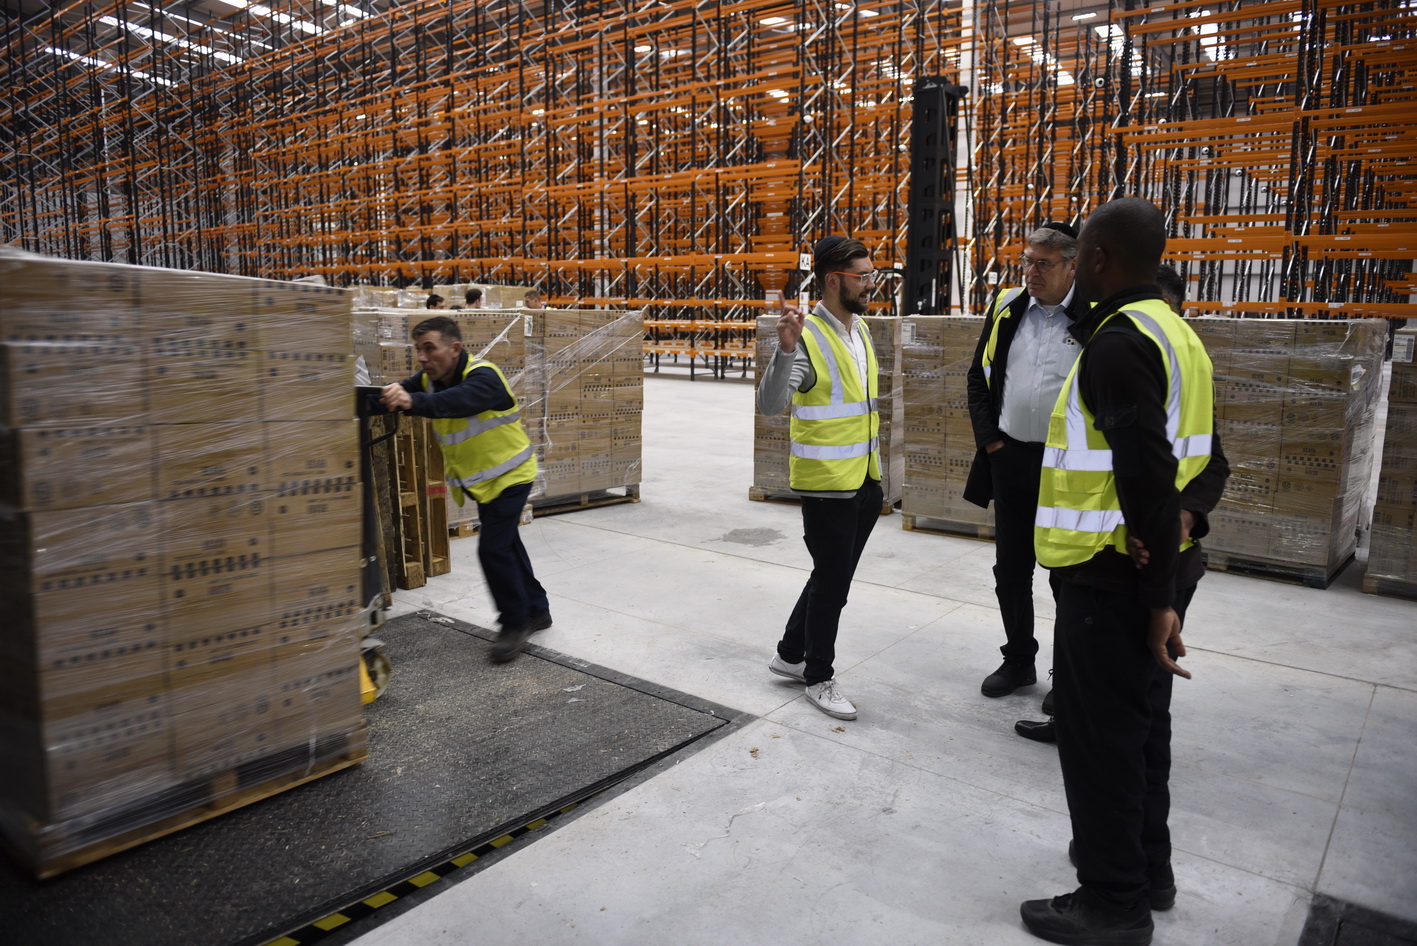 merseyside-photography at a logistics warehouse